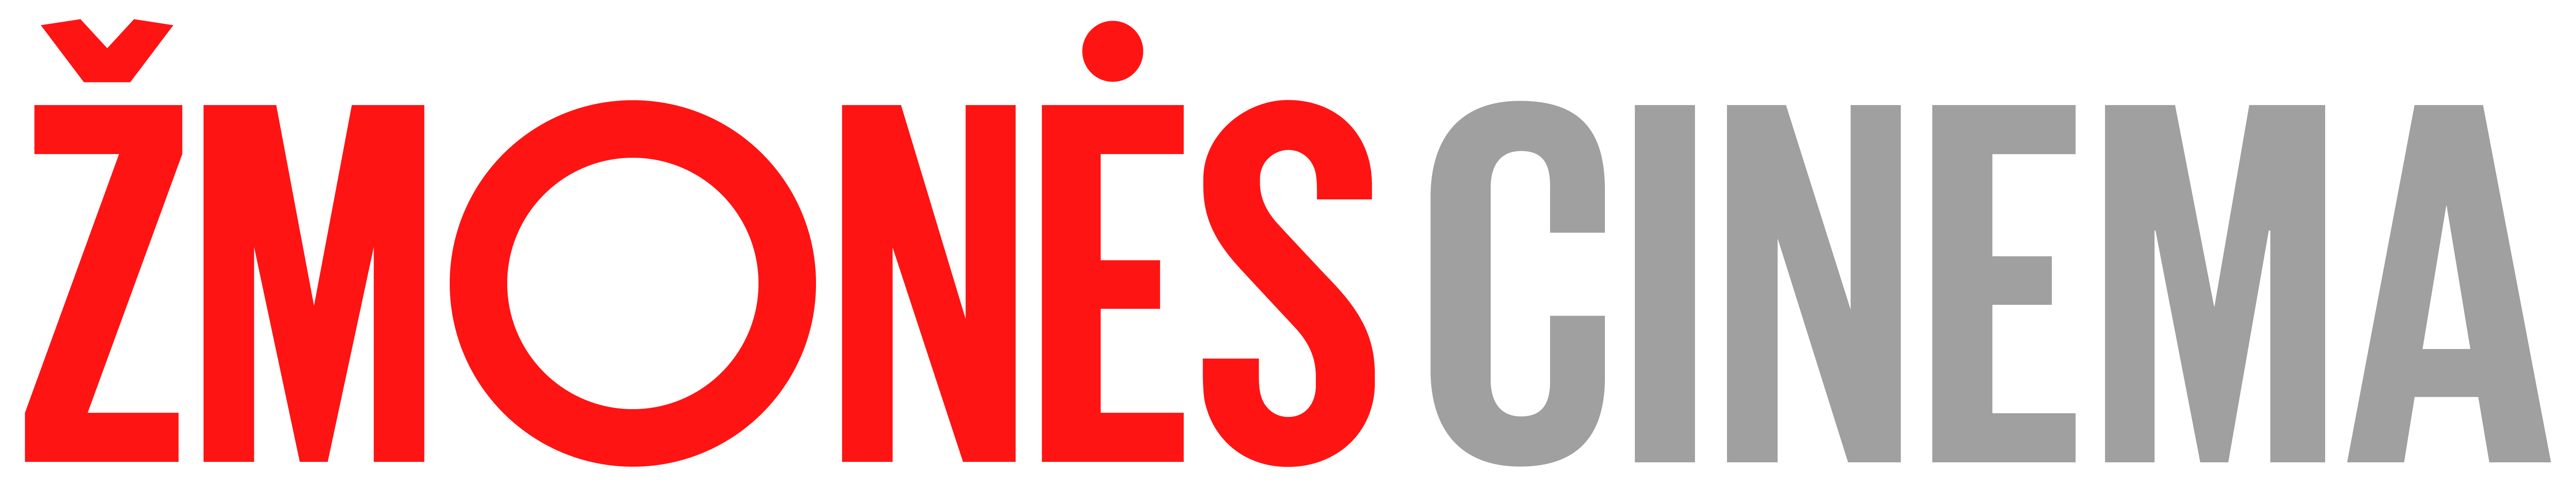 zmones cinema logo